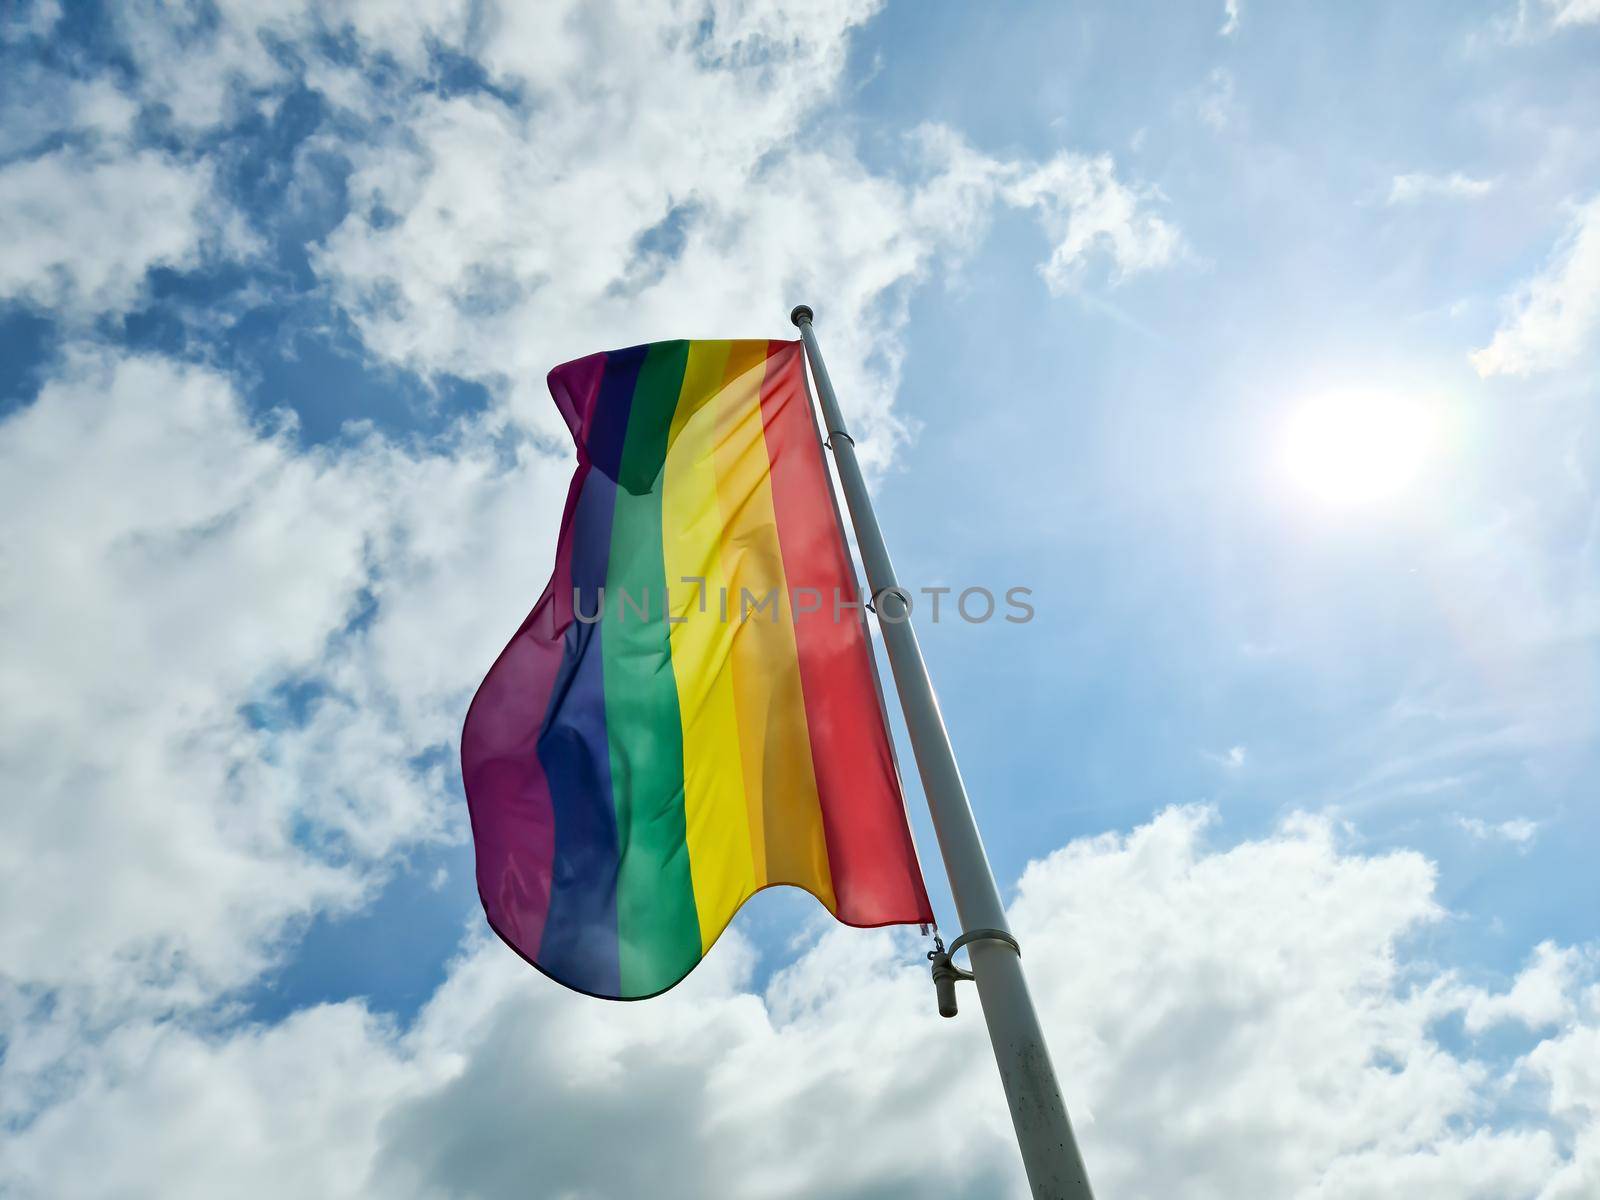 Rainbow pride flag illustration. Lgbt community symbol in rainbow colors against the blue sky 